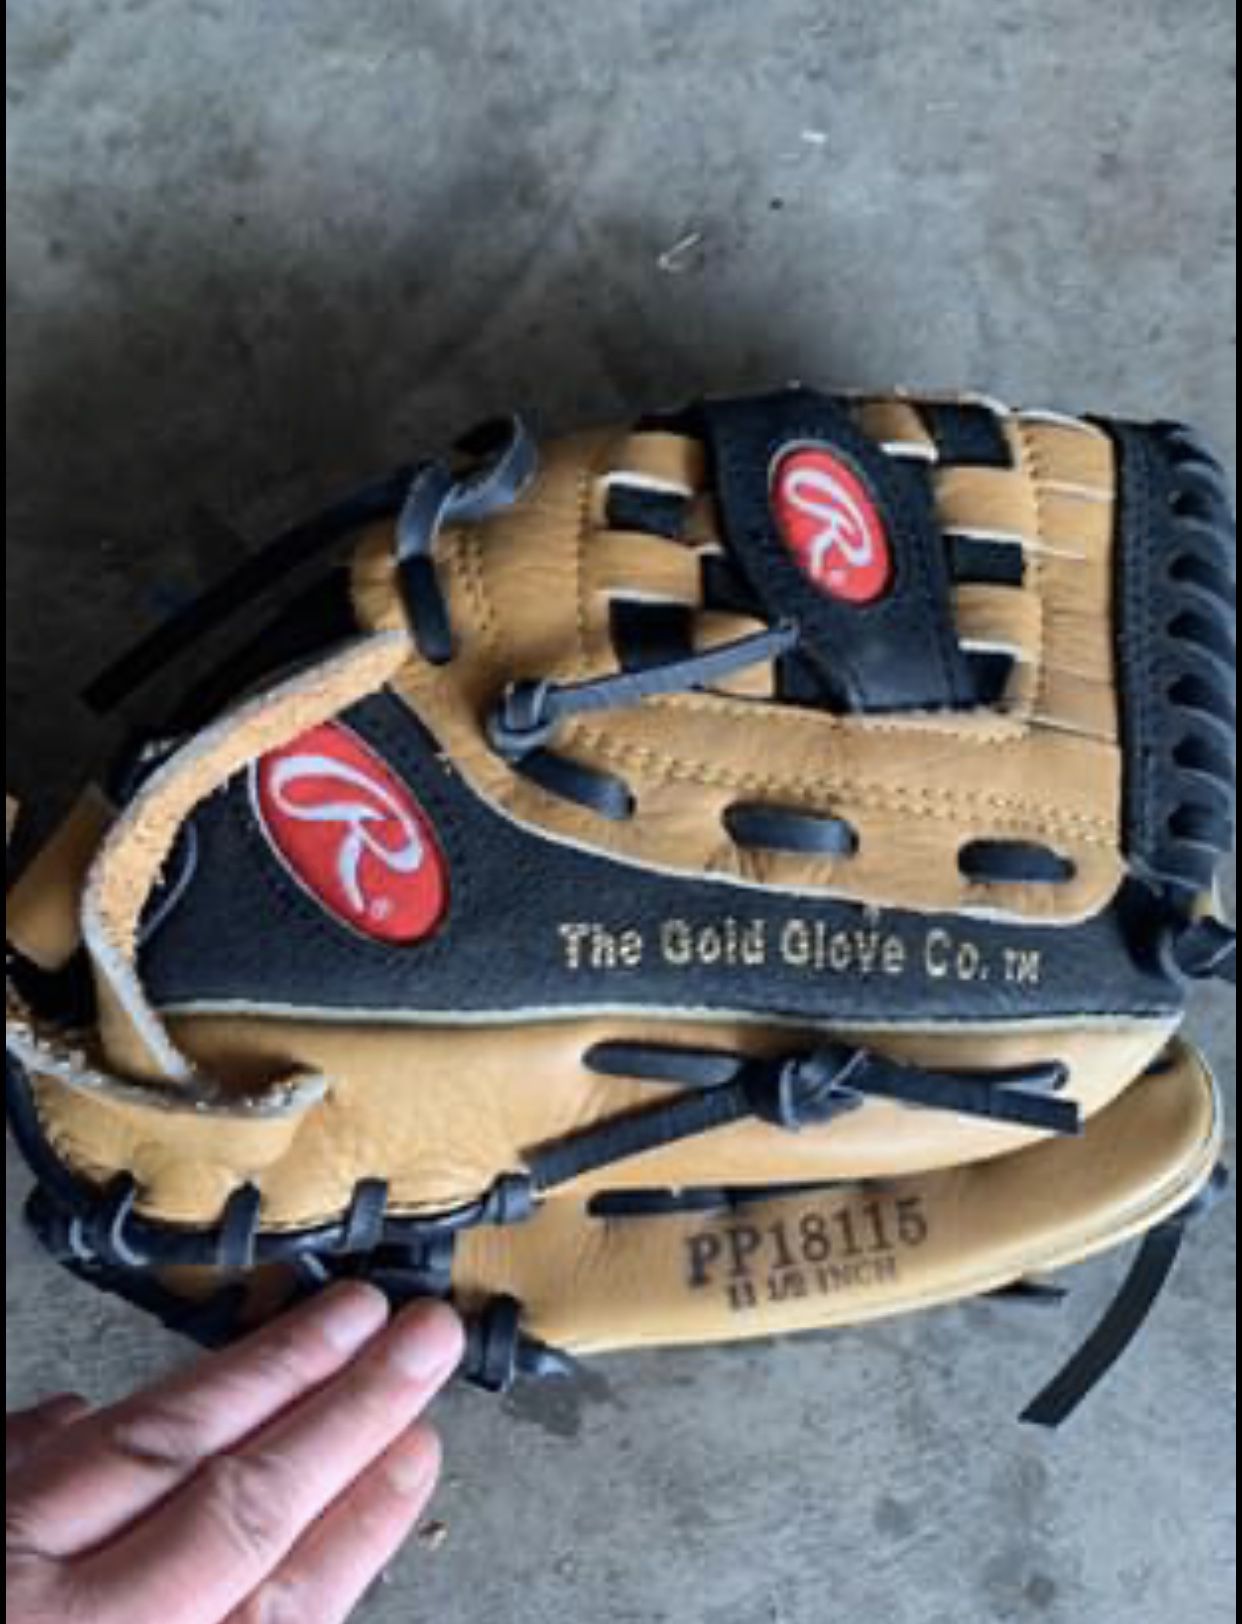 Rawlings youth baseball glove